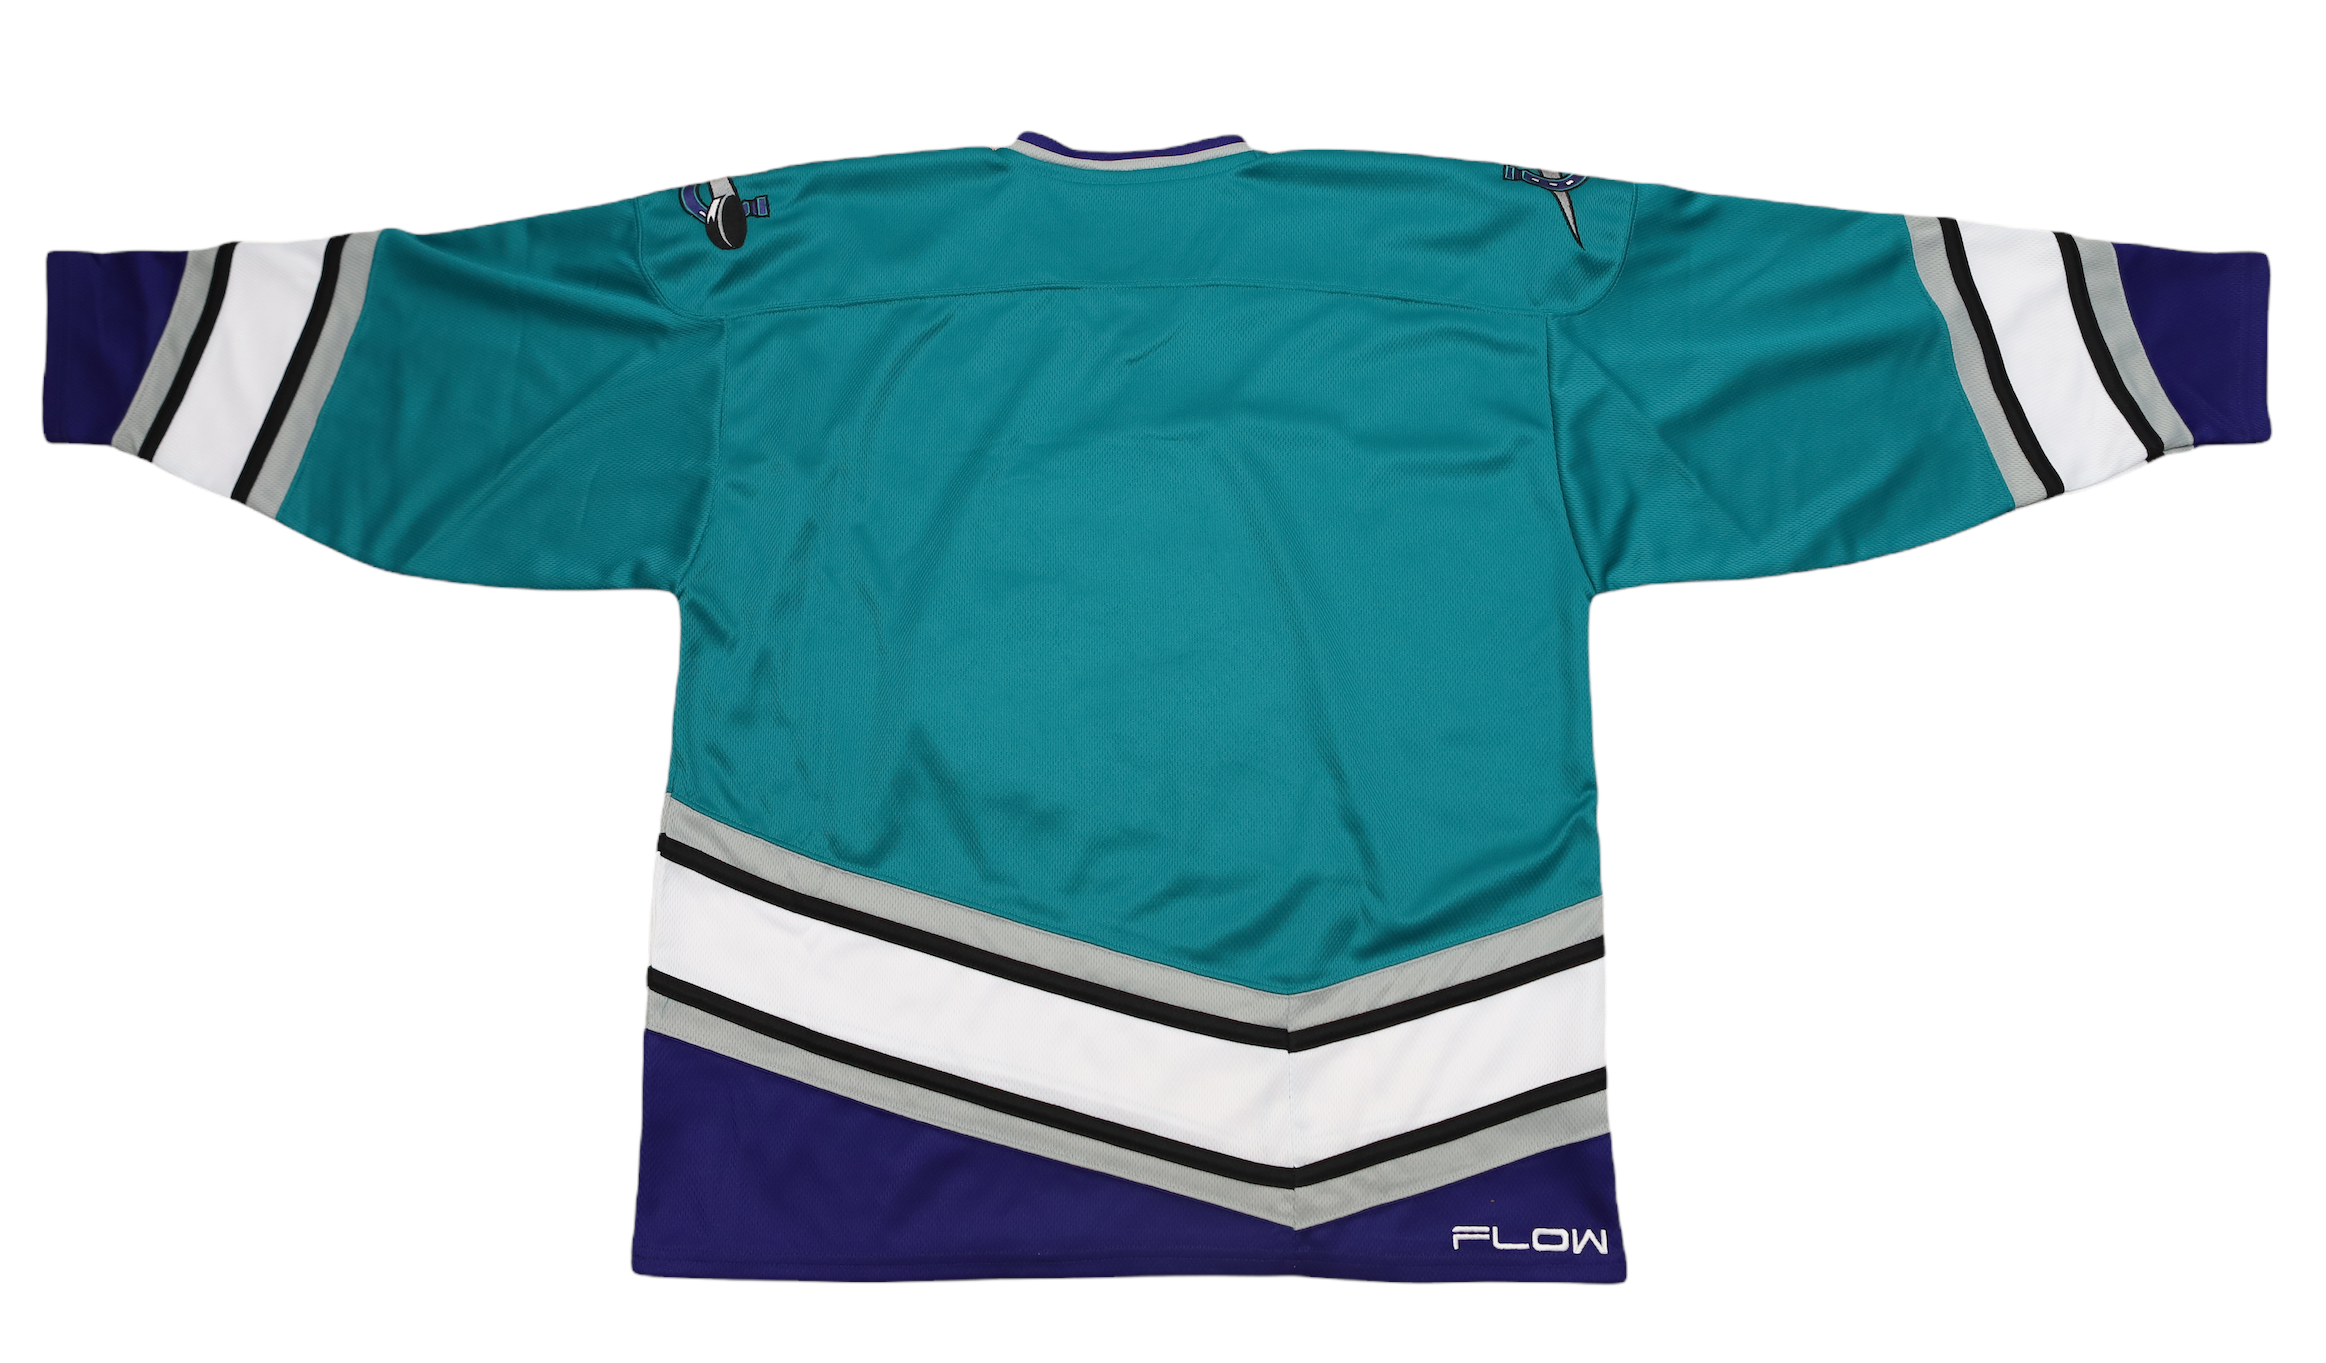 Anaheim Ducks Retro Alternate Hockey Hoodie - S / Teal / Polyester